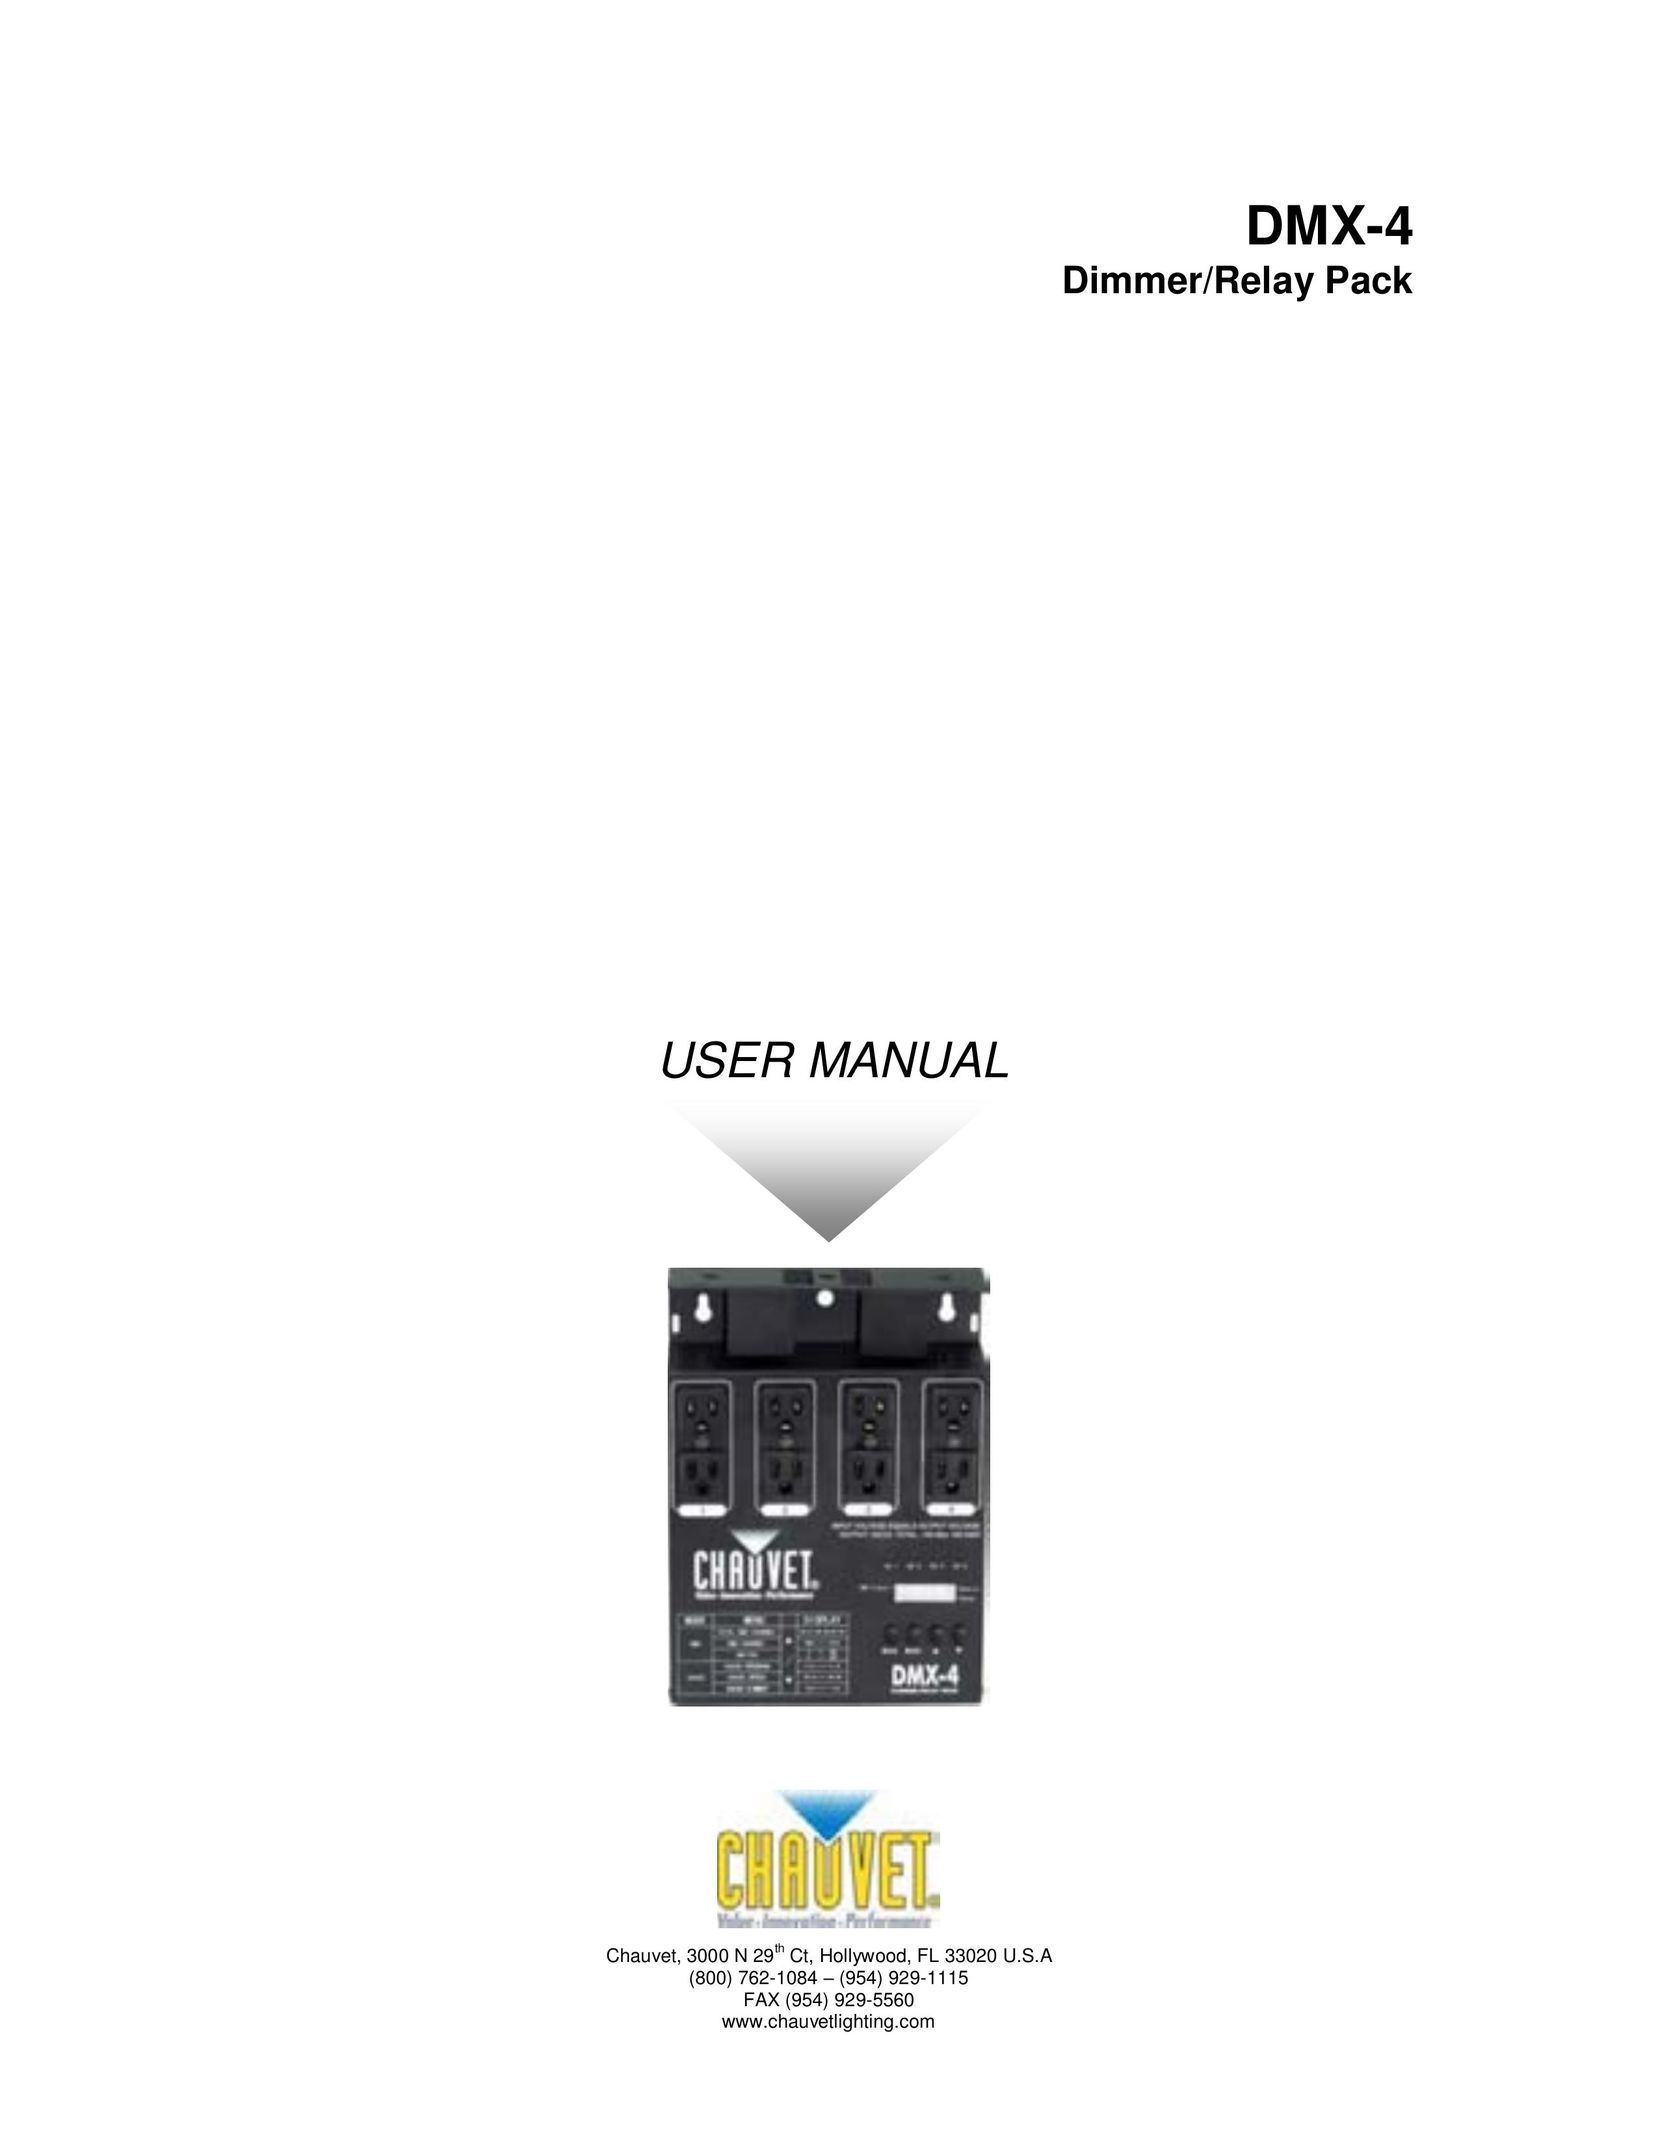 Chauvet DMX-4 Power Supply User Manual